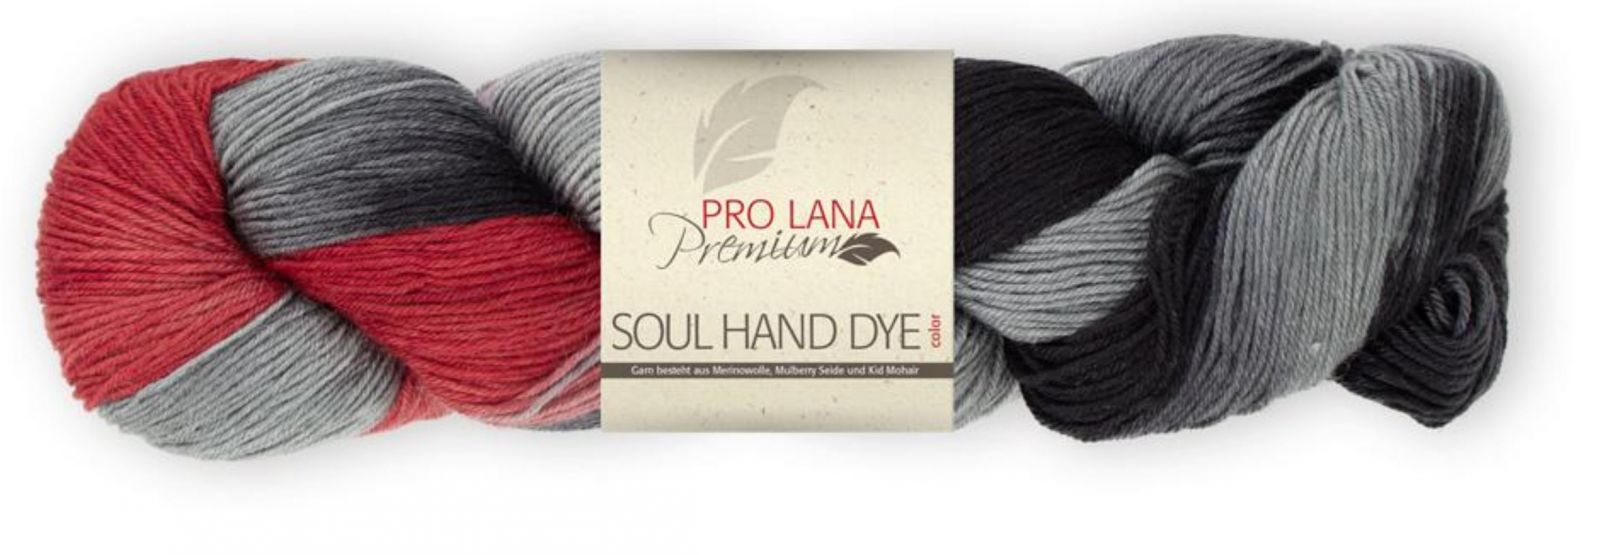 PRO LANA Premium Soul Hand Dye color 81